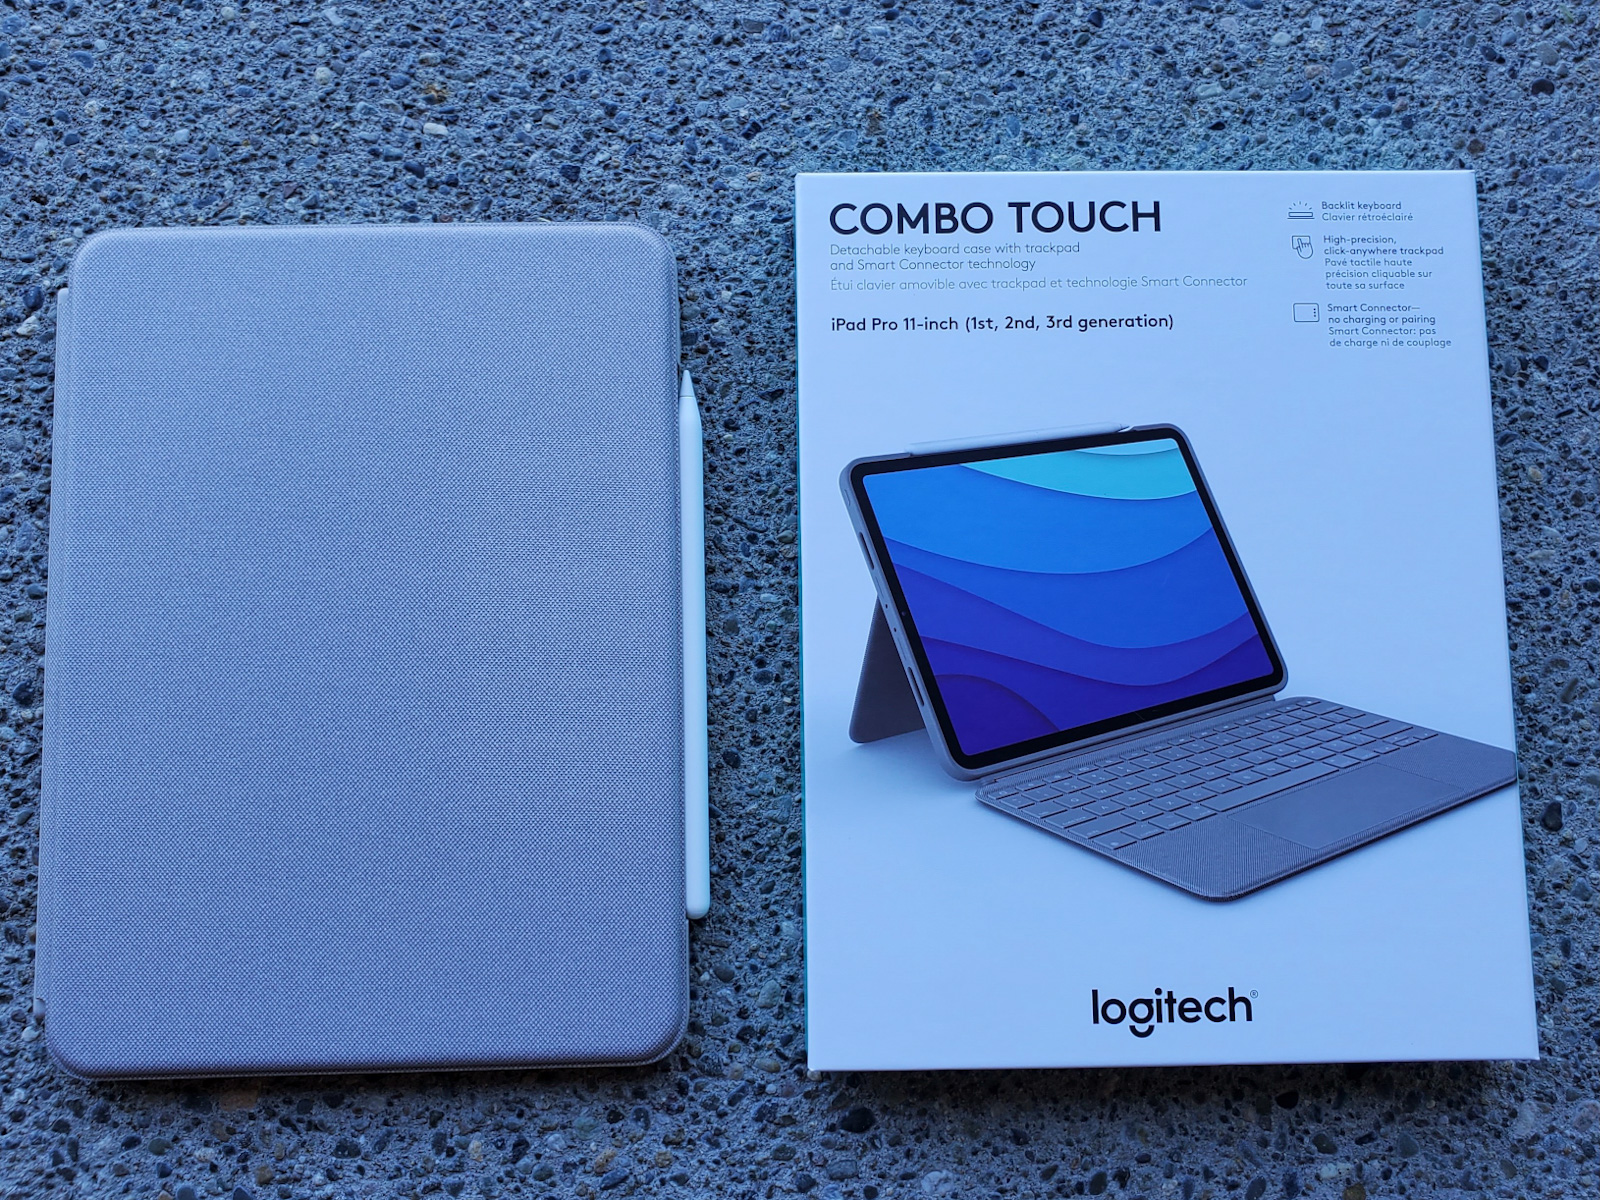  Logitech Combo Touch iPad Pro 11-inch (1st, 2nd, 3rd